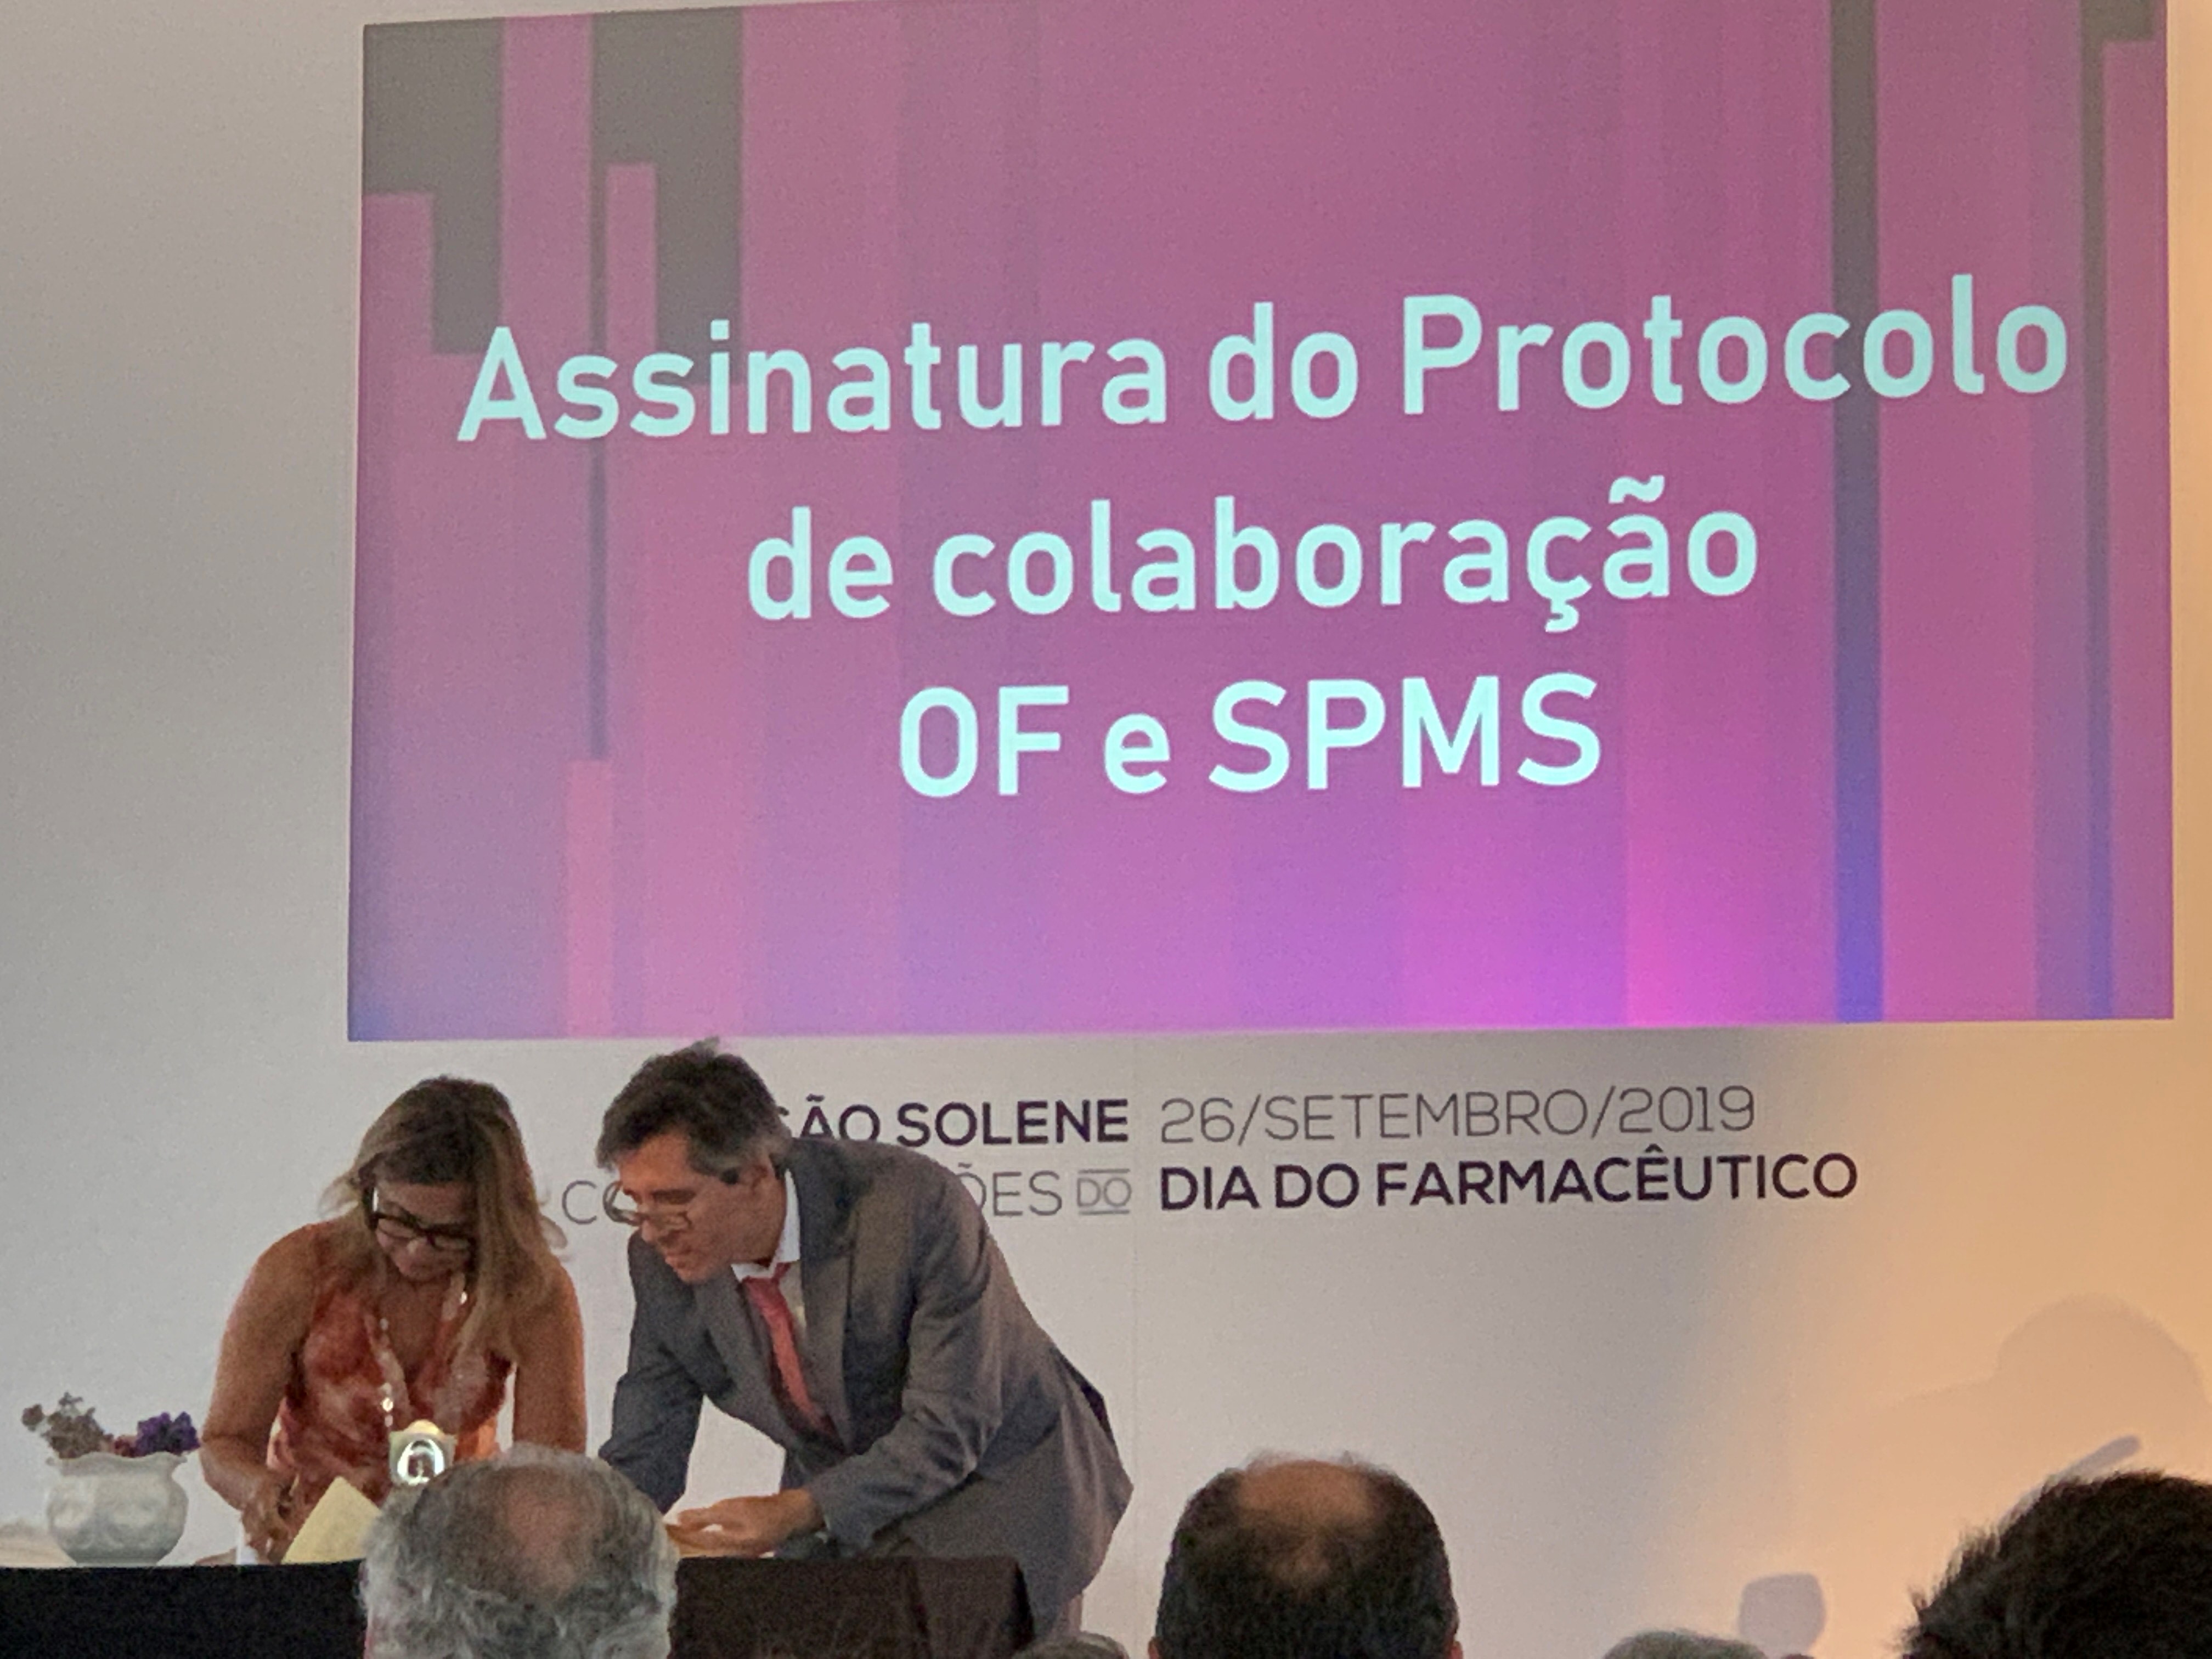 Assinatura Protocolo e SPMS